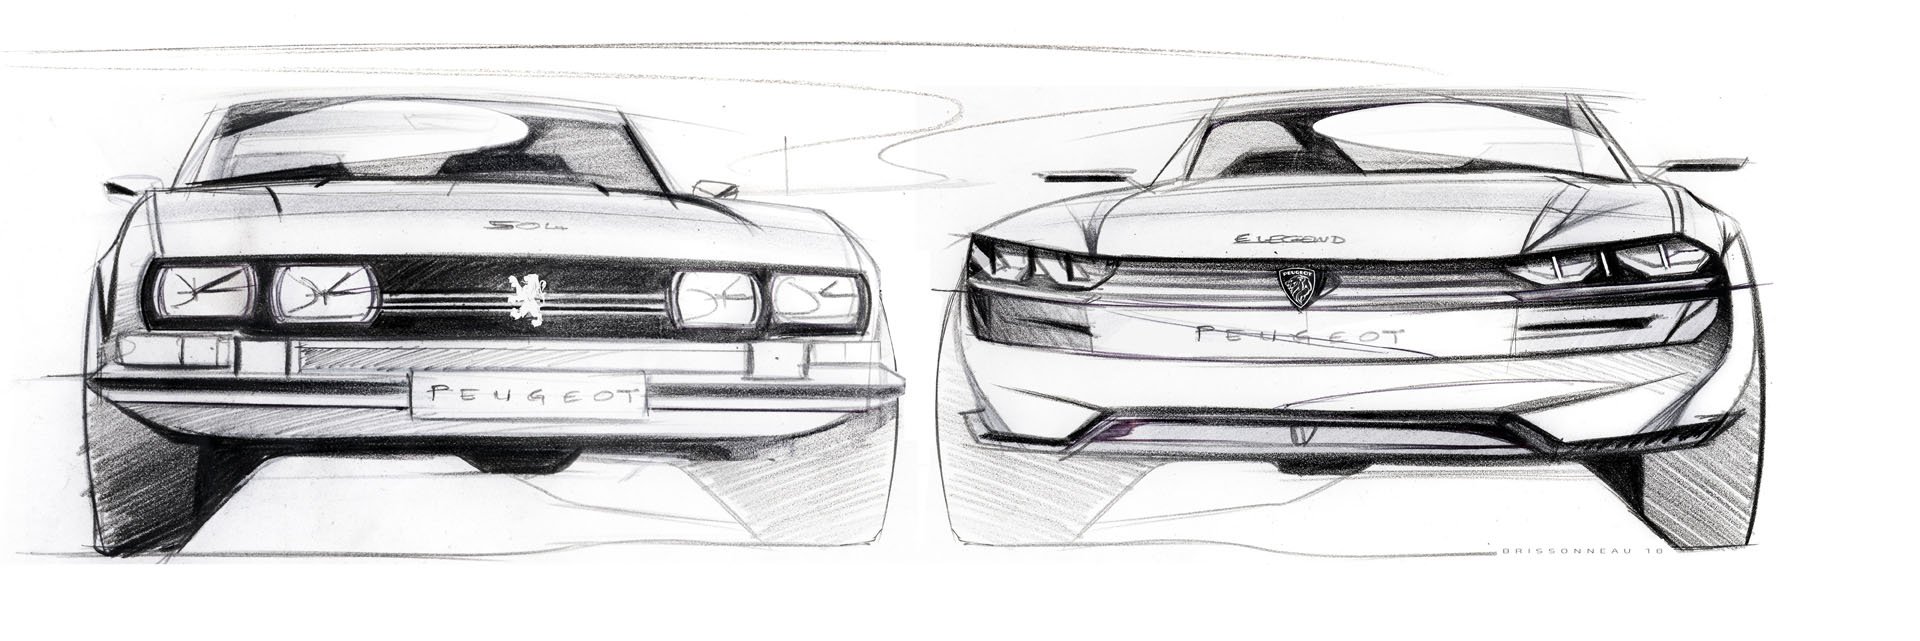 Peugeot e-Legend Concept, 2018 - Design Sketch